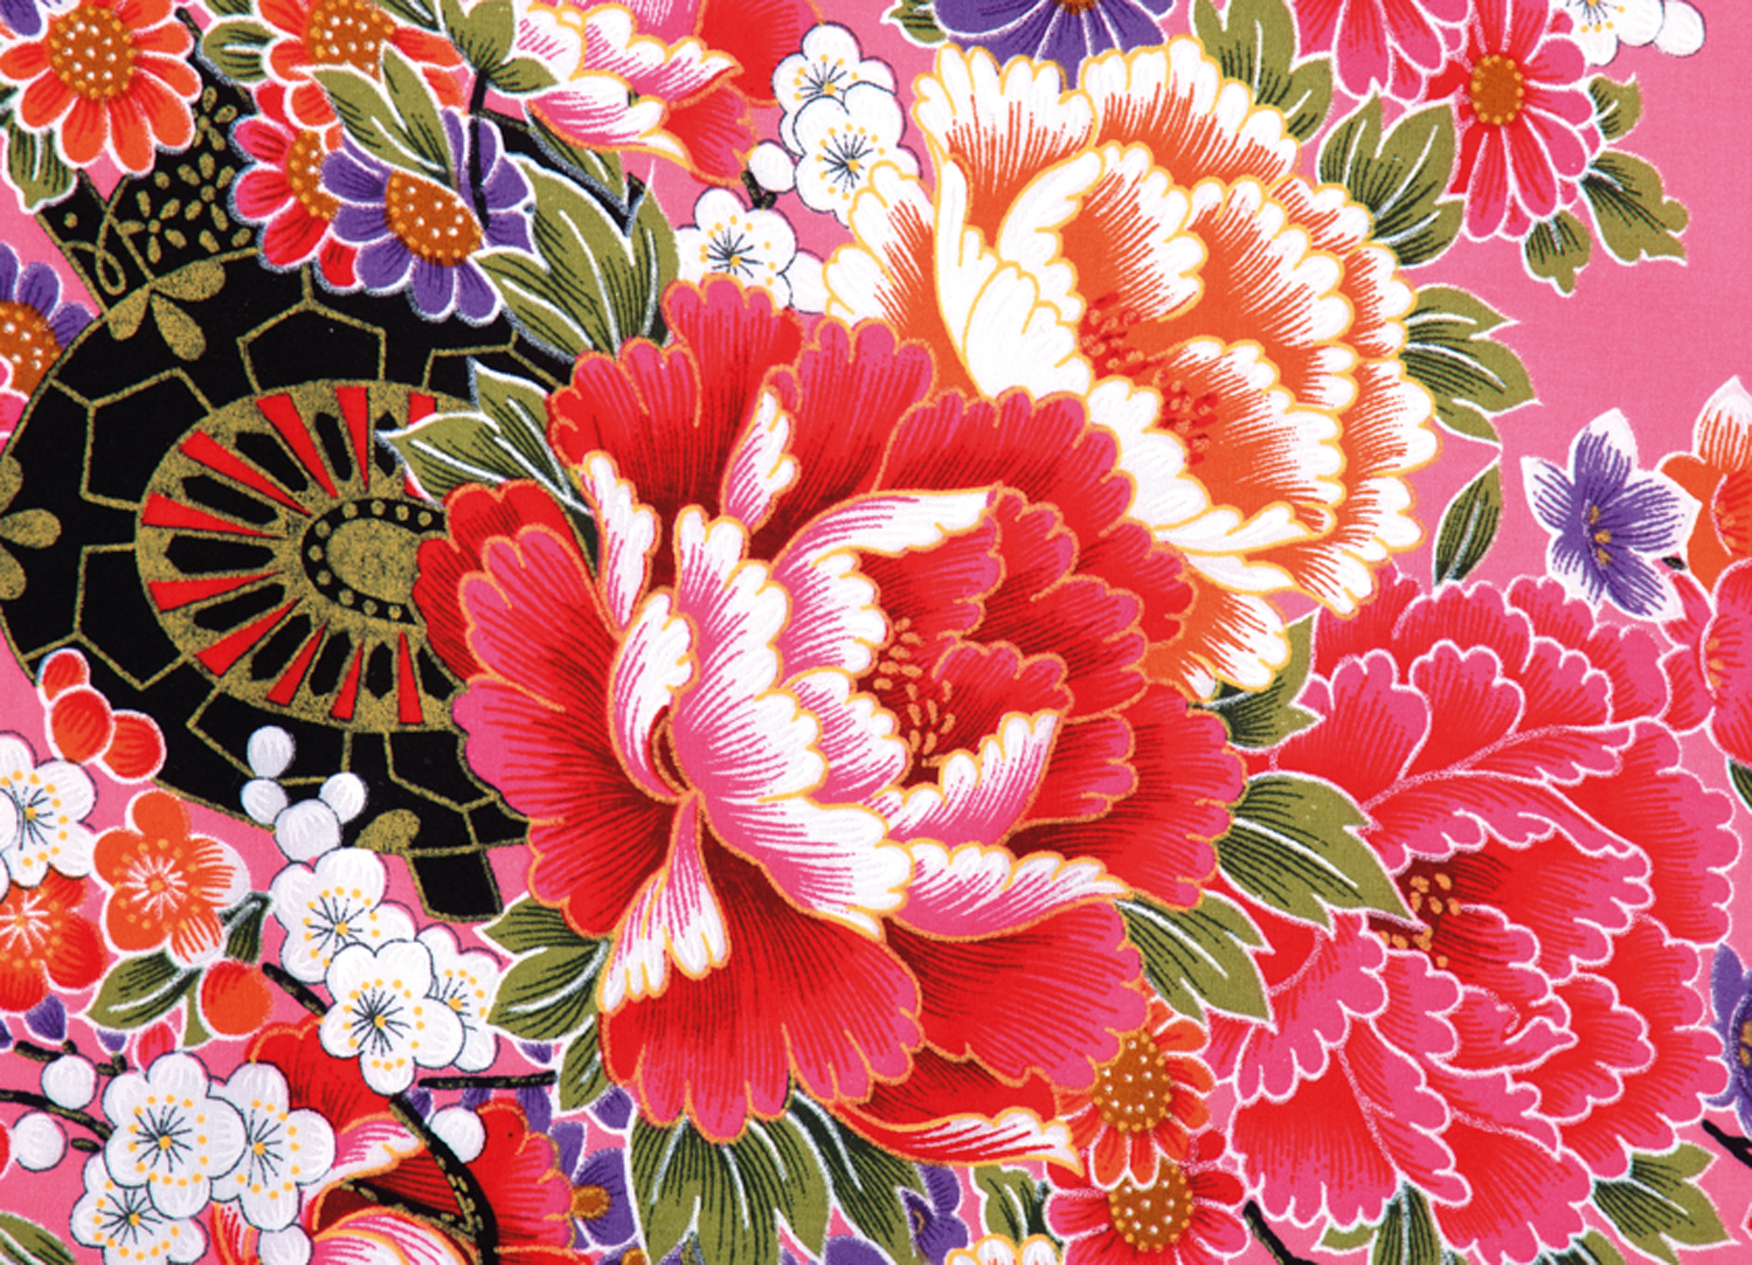 Wandtextil MondiArt | PINK FLOWER DREAMS | L: 132 x 190 cm